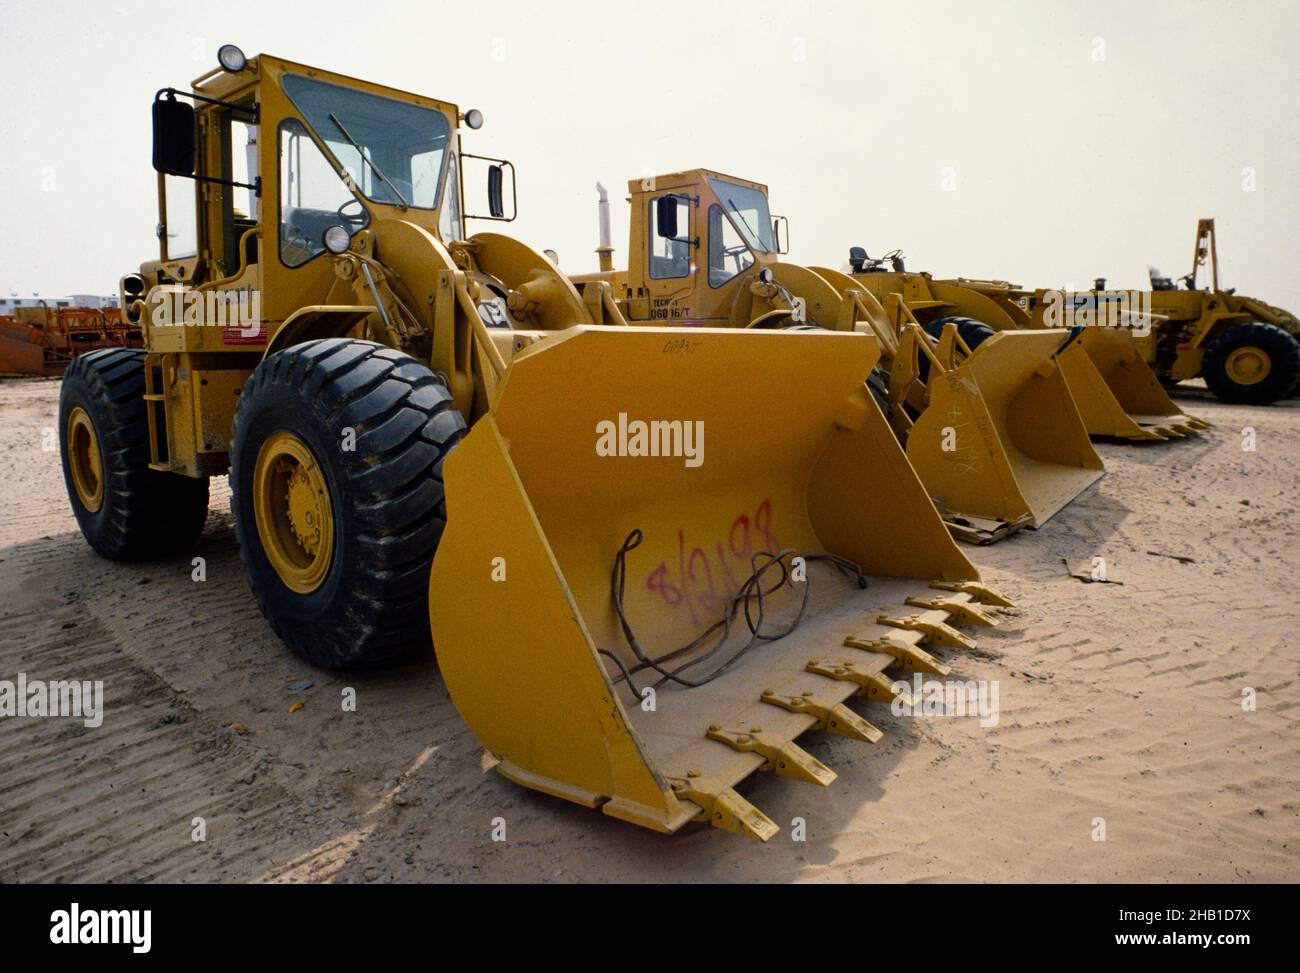 Oil industry in Ras Tanura area, Saudi Arabia,  caterpillar bulldozer vehicles 1979 Stock Photo